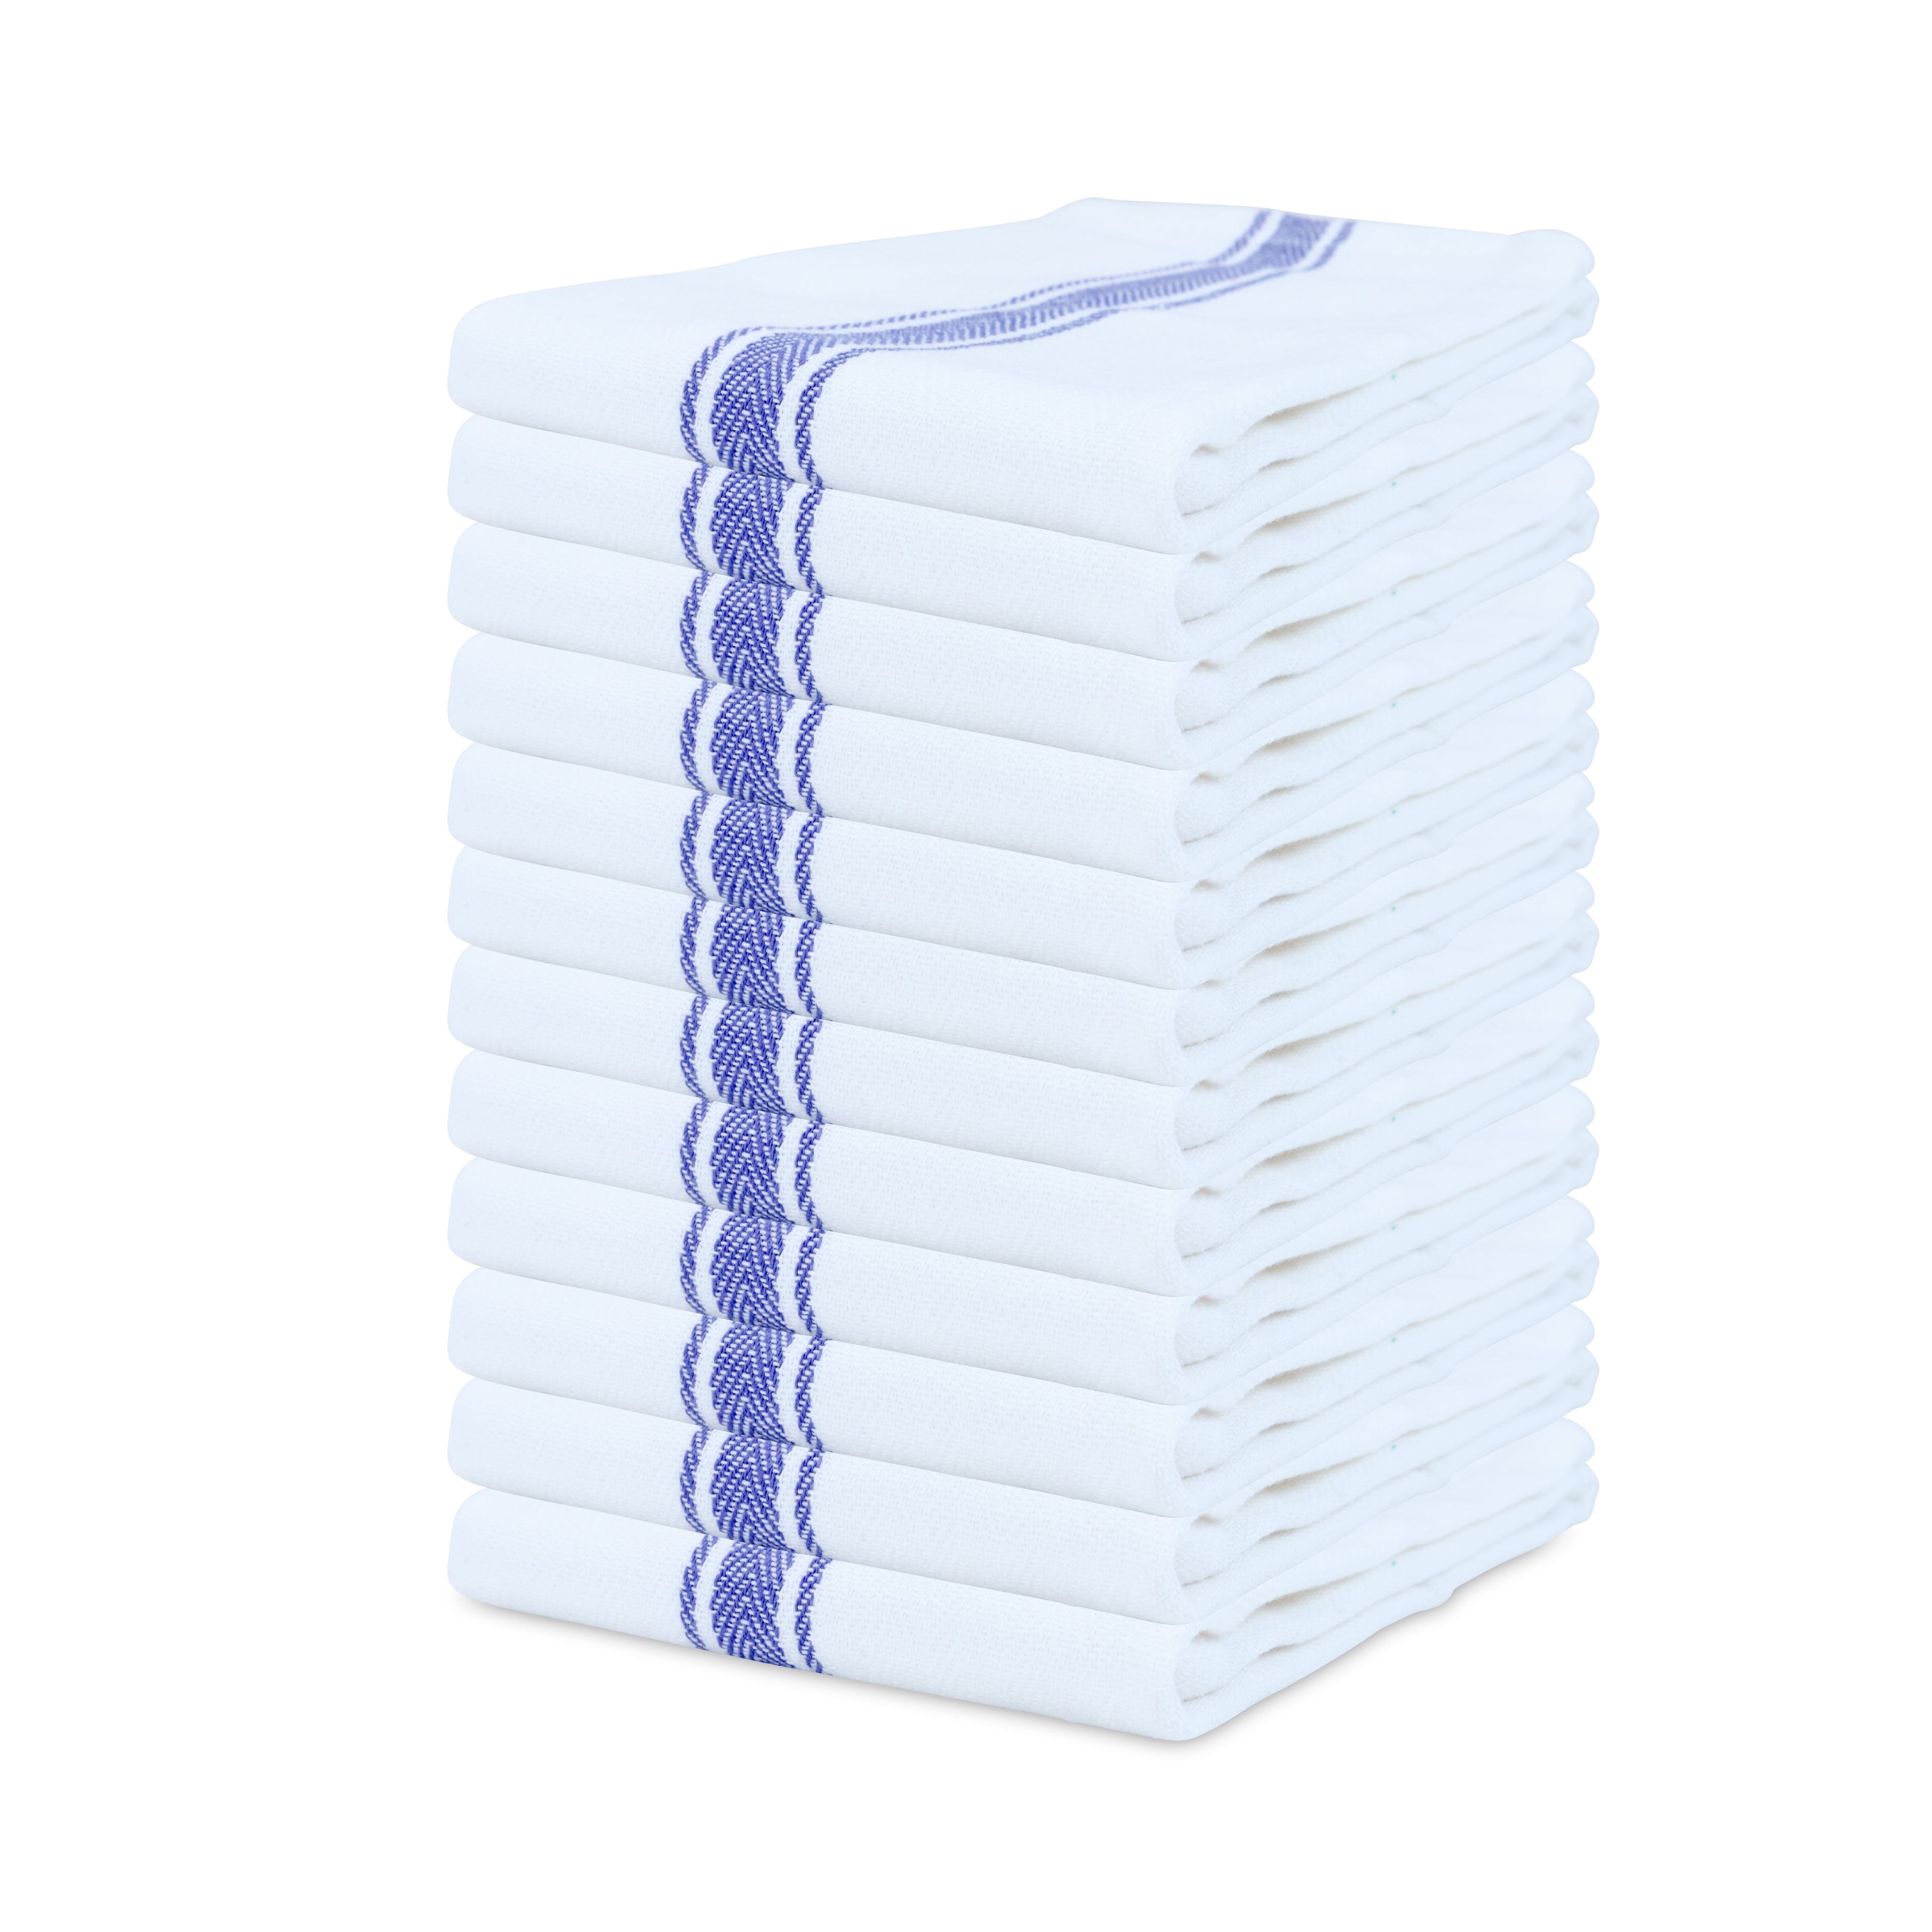 Arkwright Herringbone Kitchen Tea Towels, Pack of 12, White with Blue  Stripe, 100% Cotton, 15 x 25 in - Walmart.com